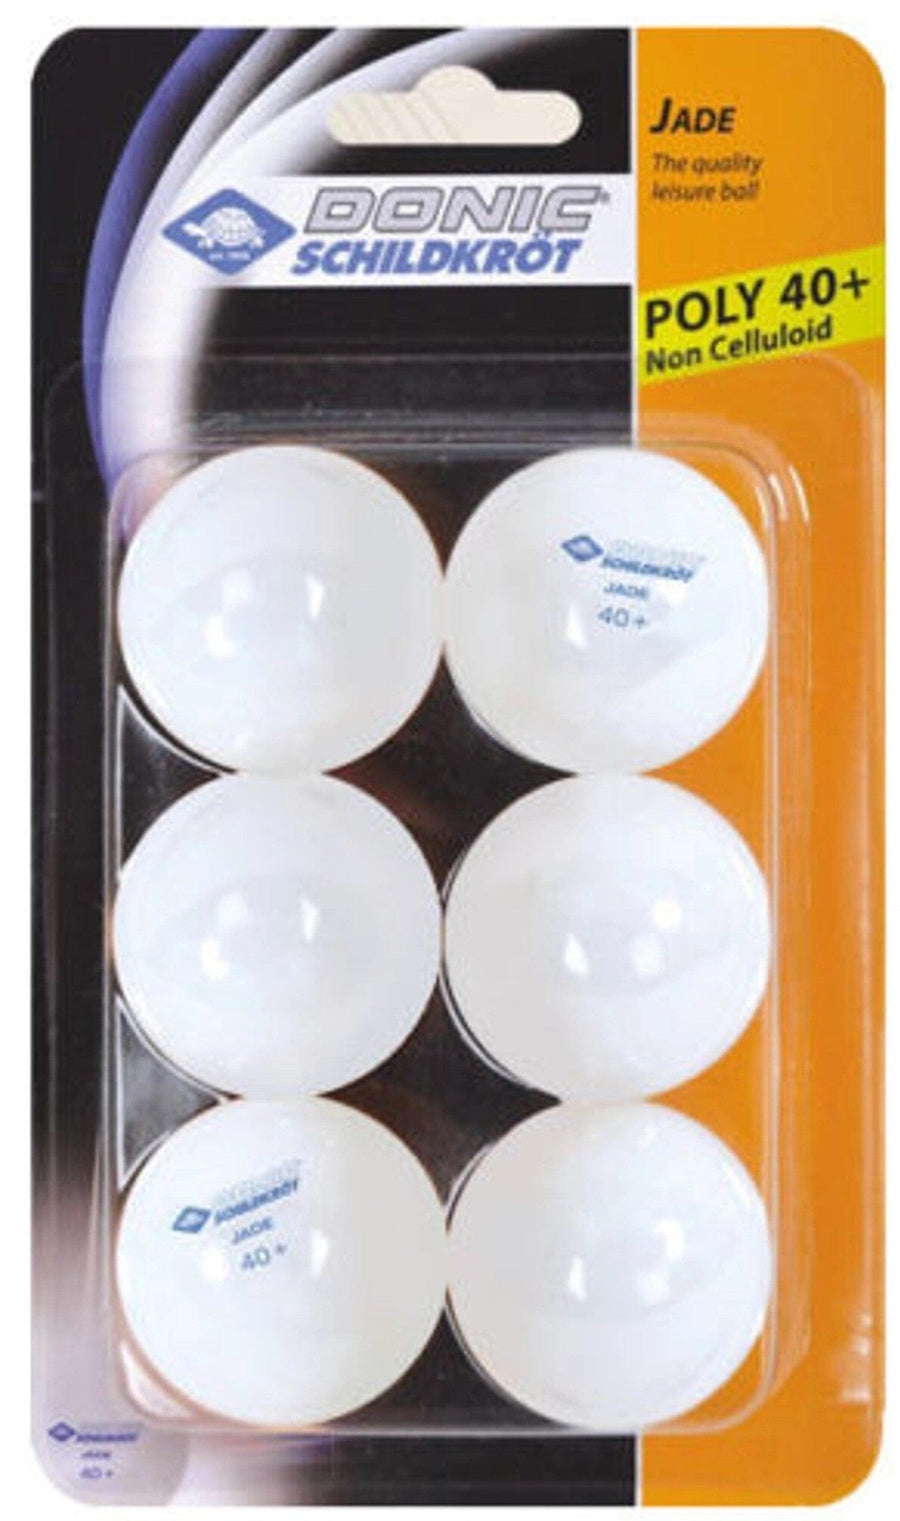 Donic-Schildkrot Jade 40+Table Tennis Balls (pack of 6) Ping-pong balls Donic White 